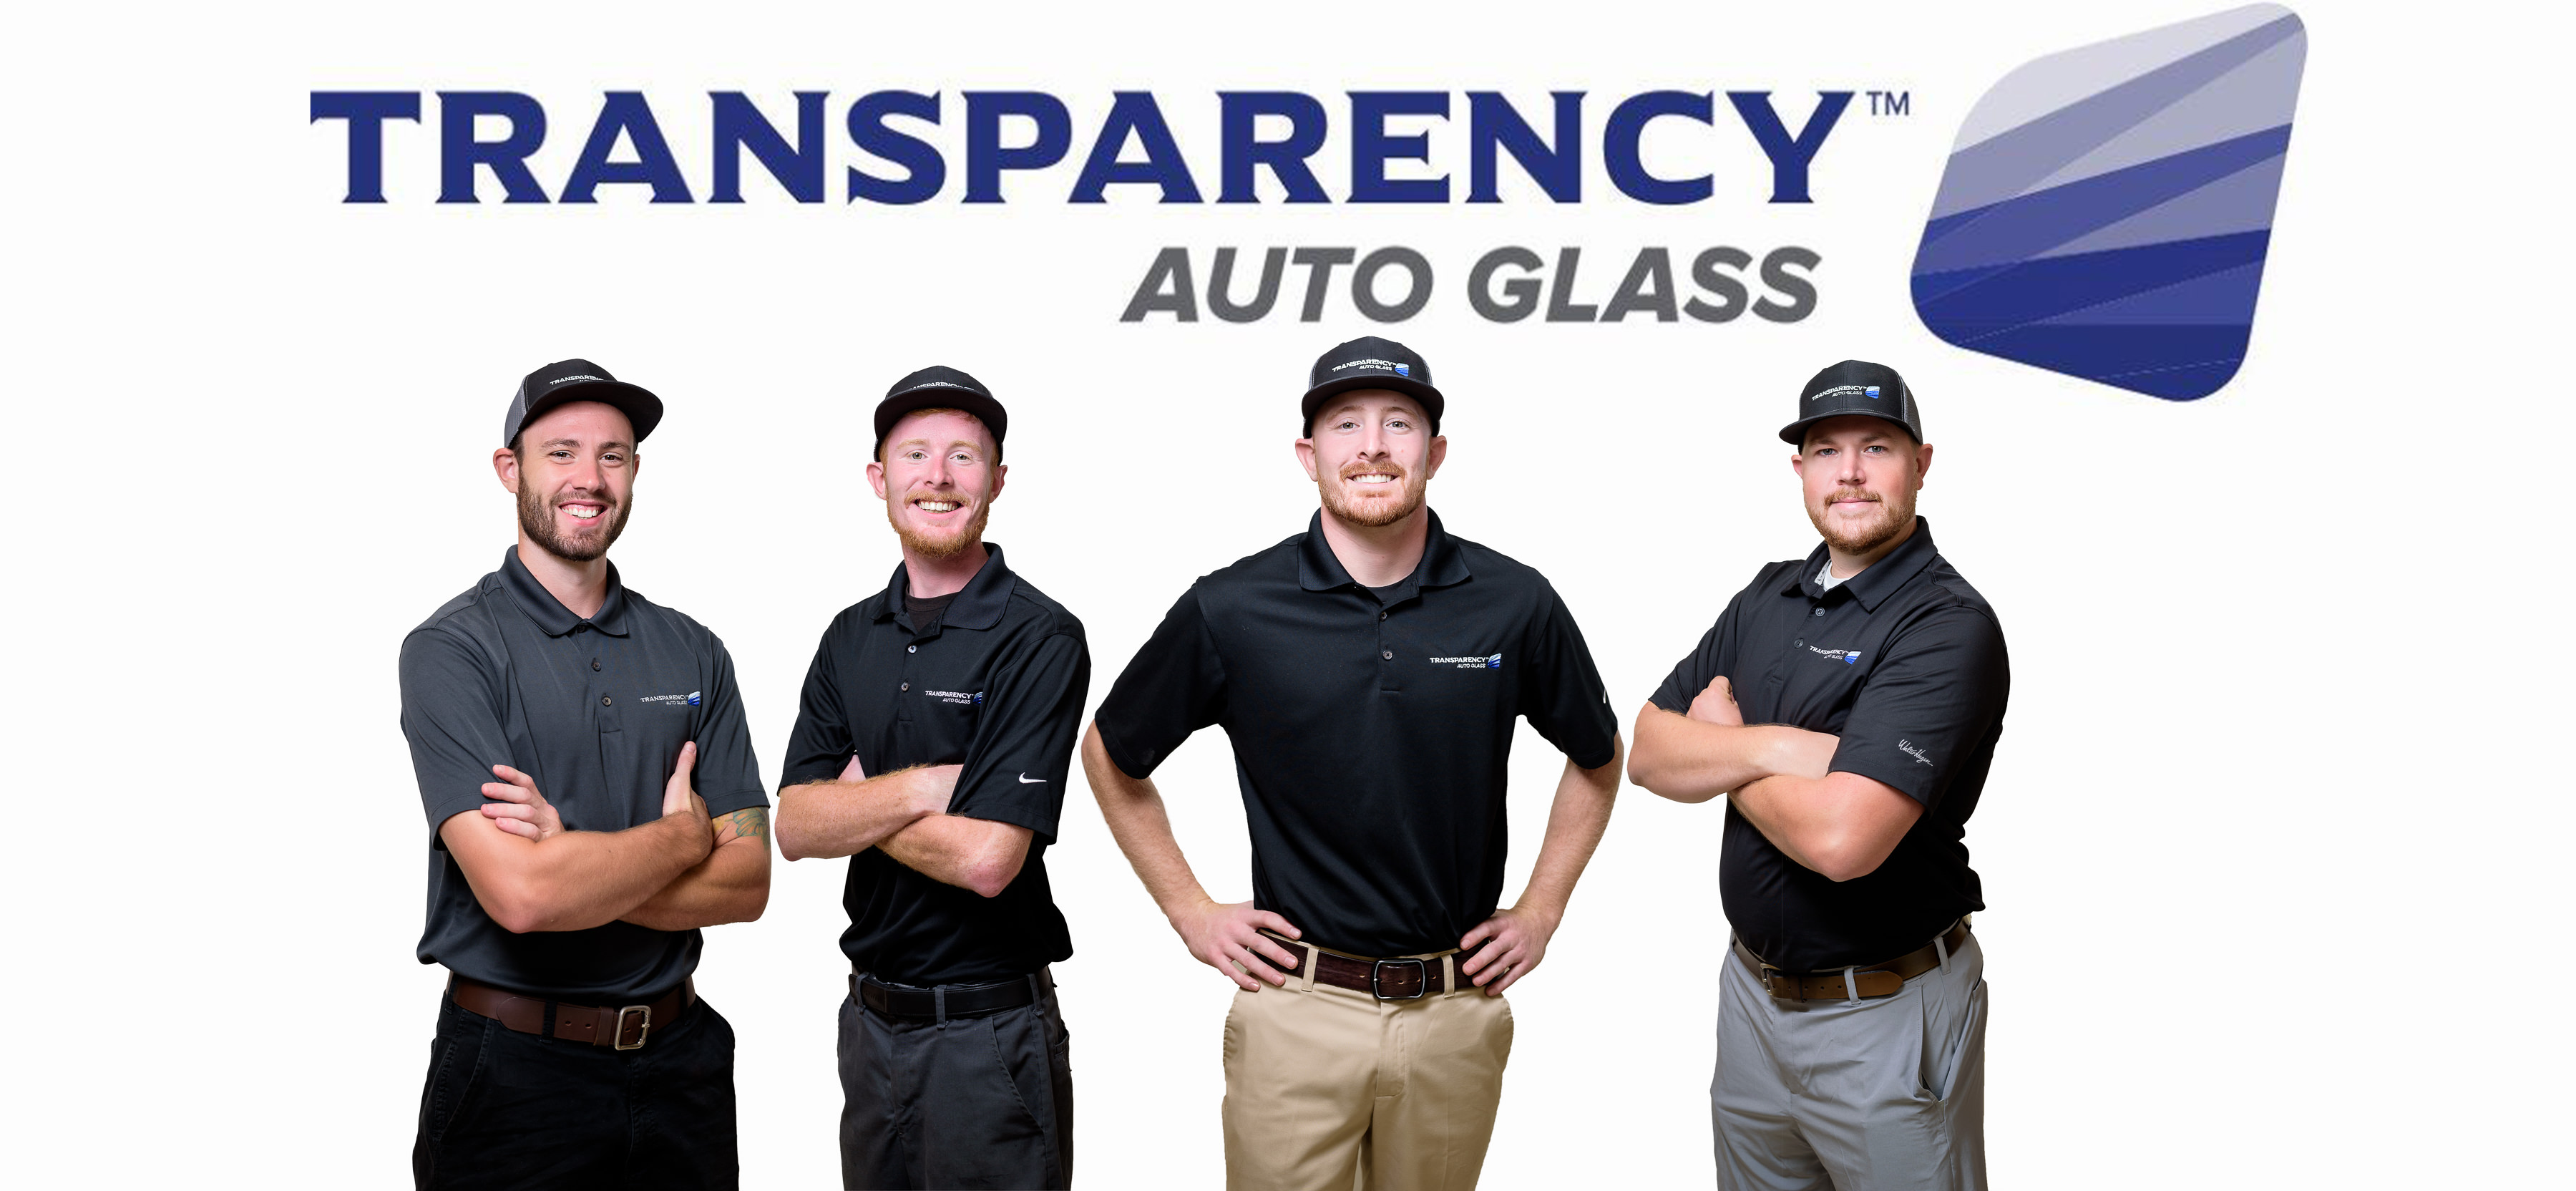 Transparency Auto Glass Staff Meet the team